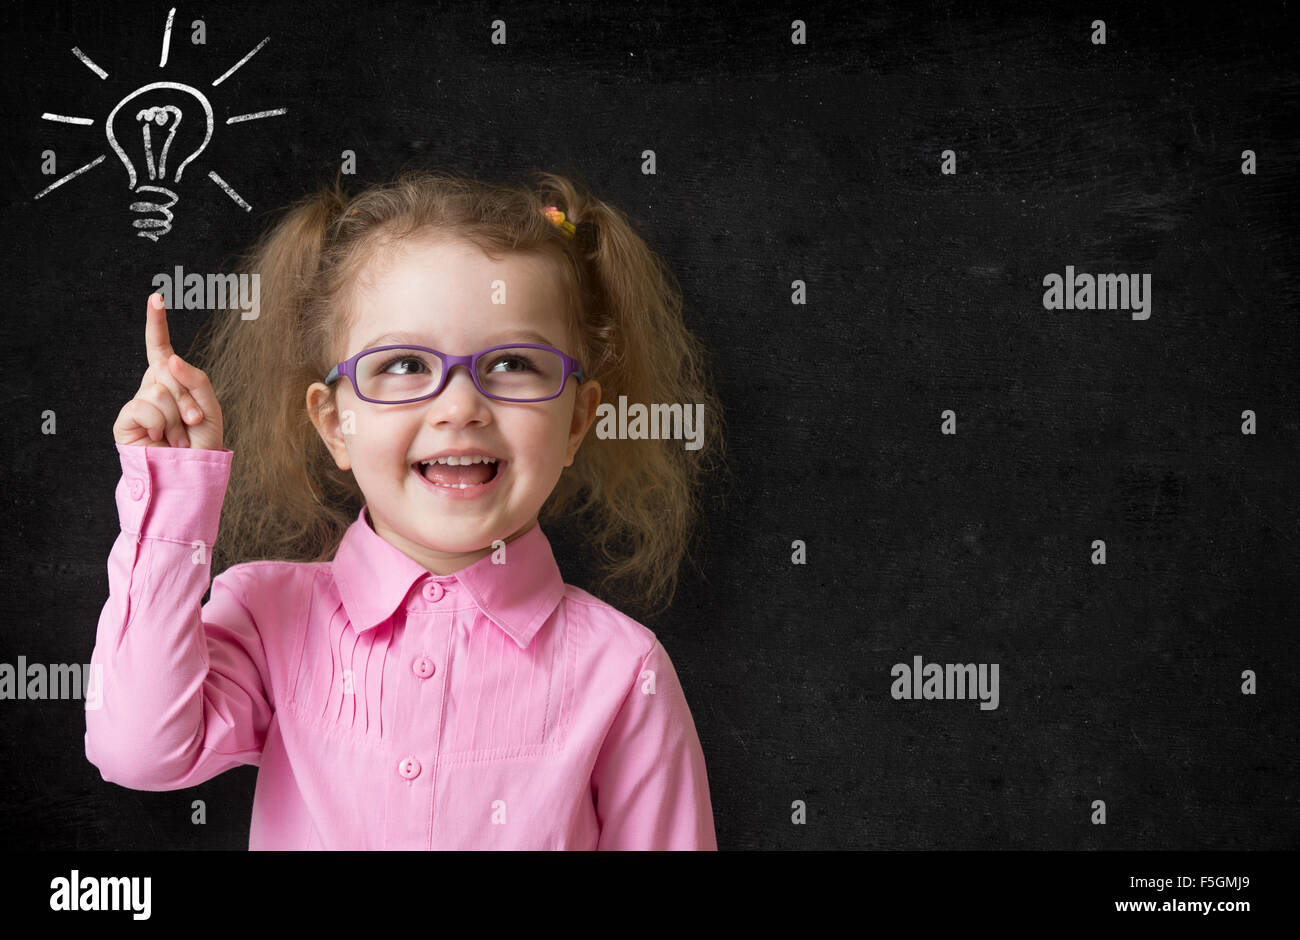 kid in glasses with idea lamp on school chalkboard Stock Photo